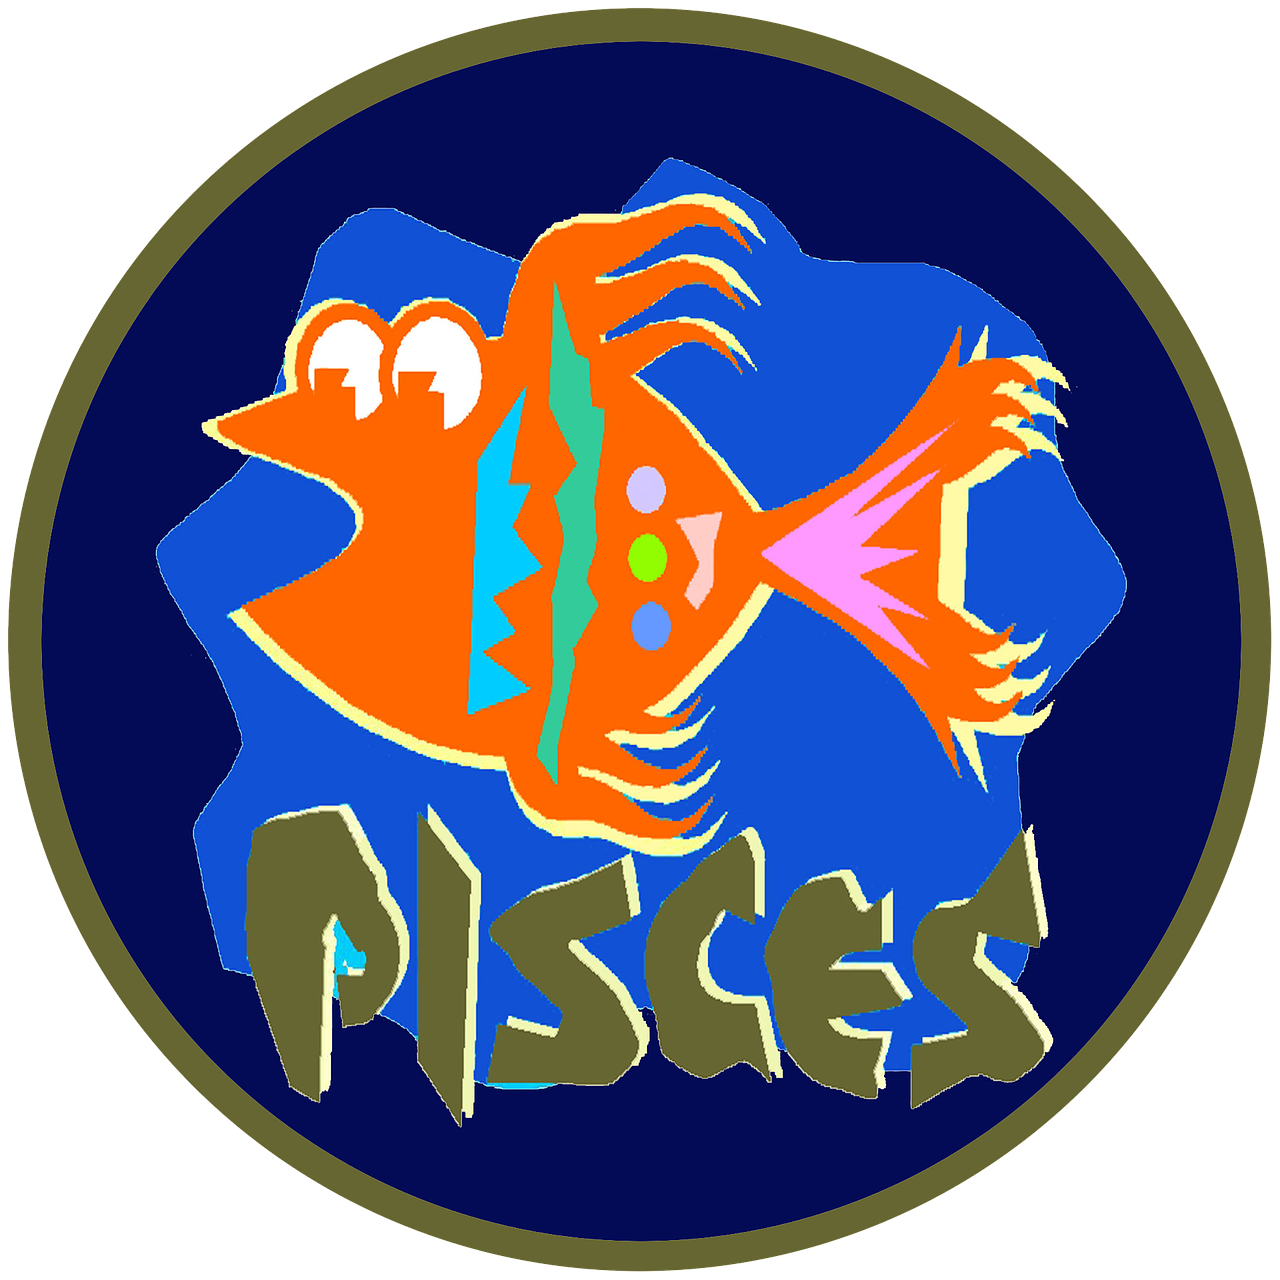 Pisces,fish,astrology,zodiac,horoscope - free image from needpix.com